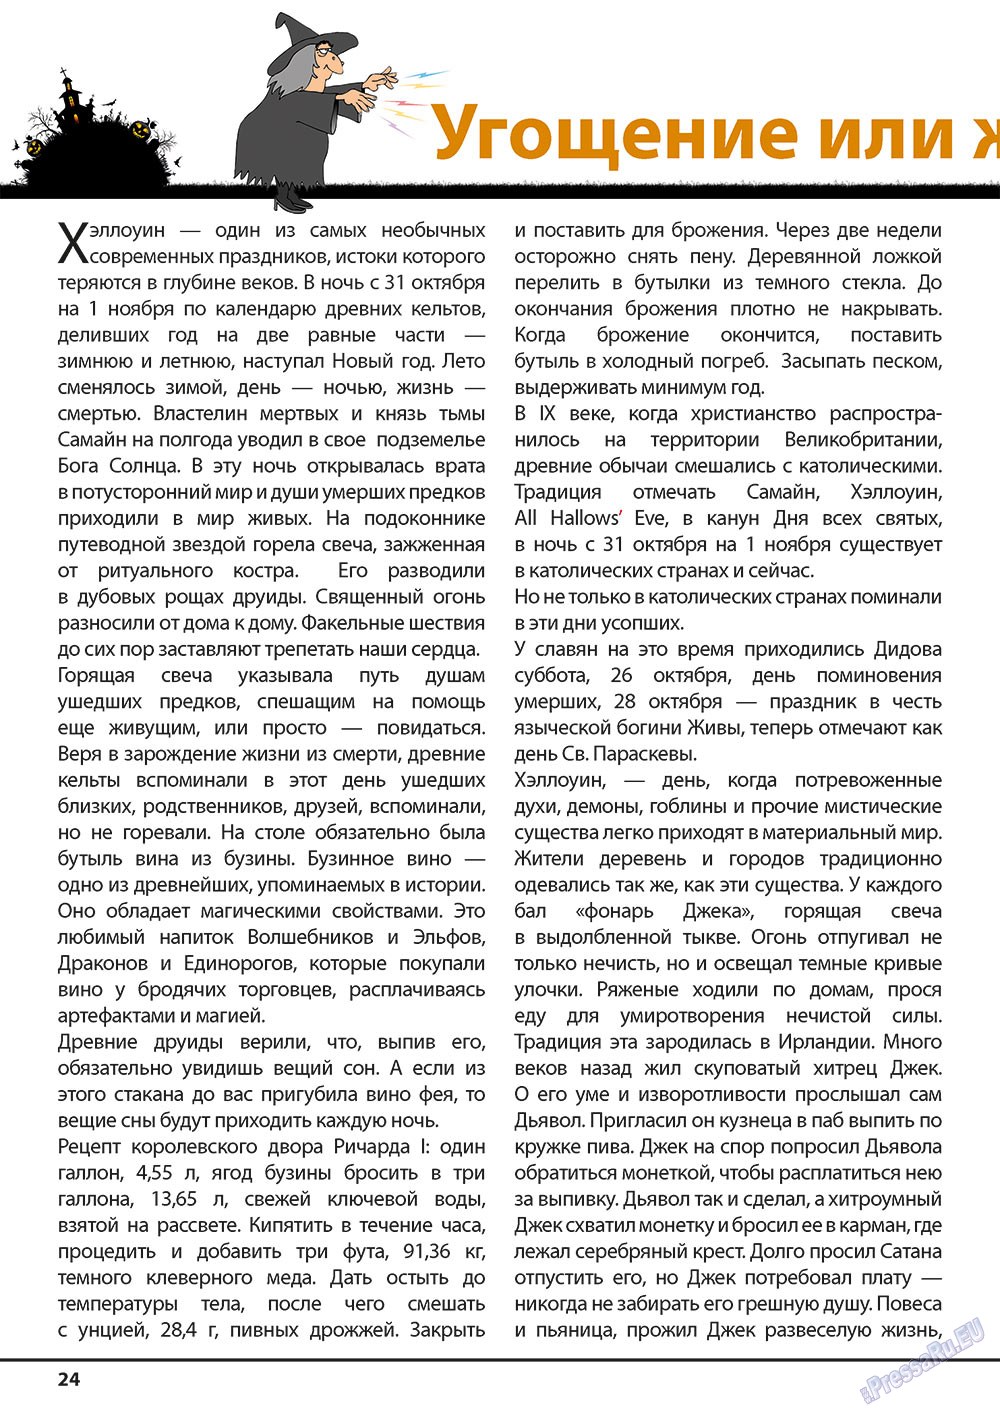 Wadim, журнал. 2012 №10 стр.24